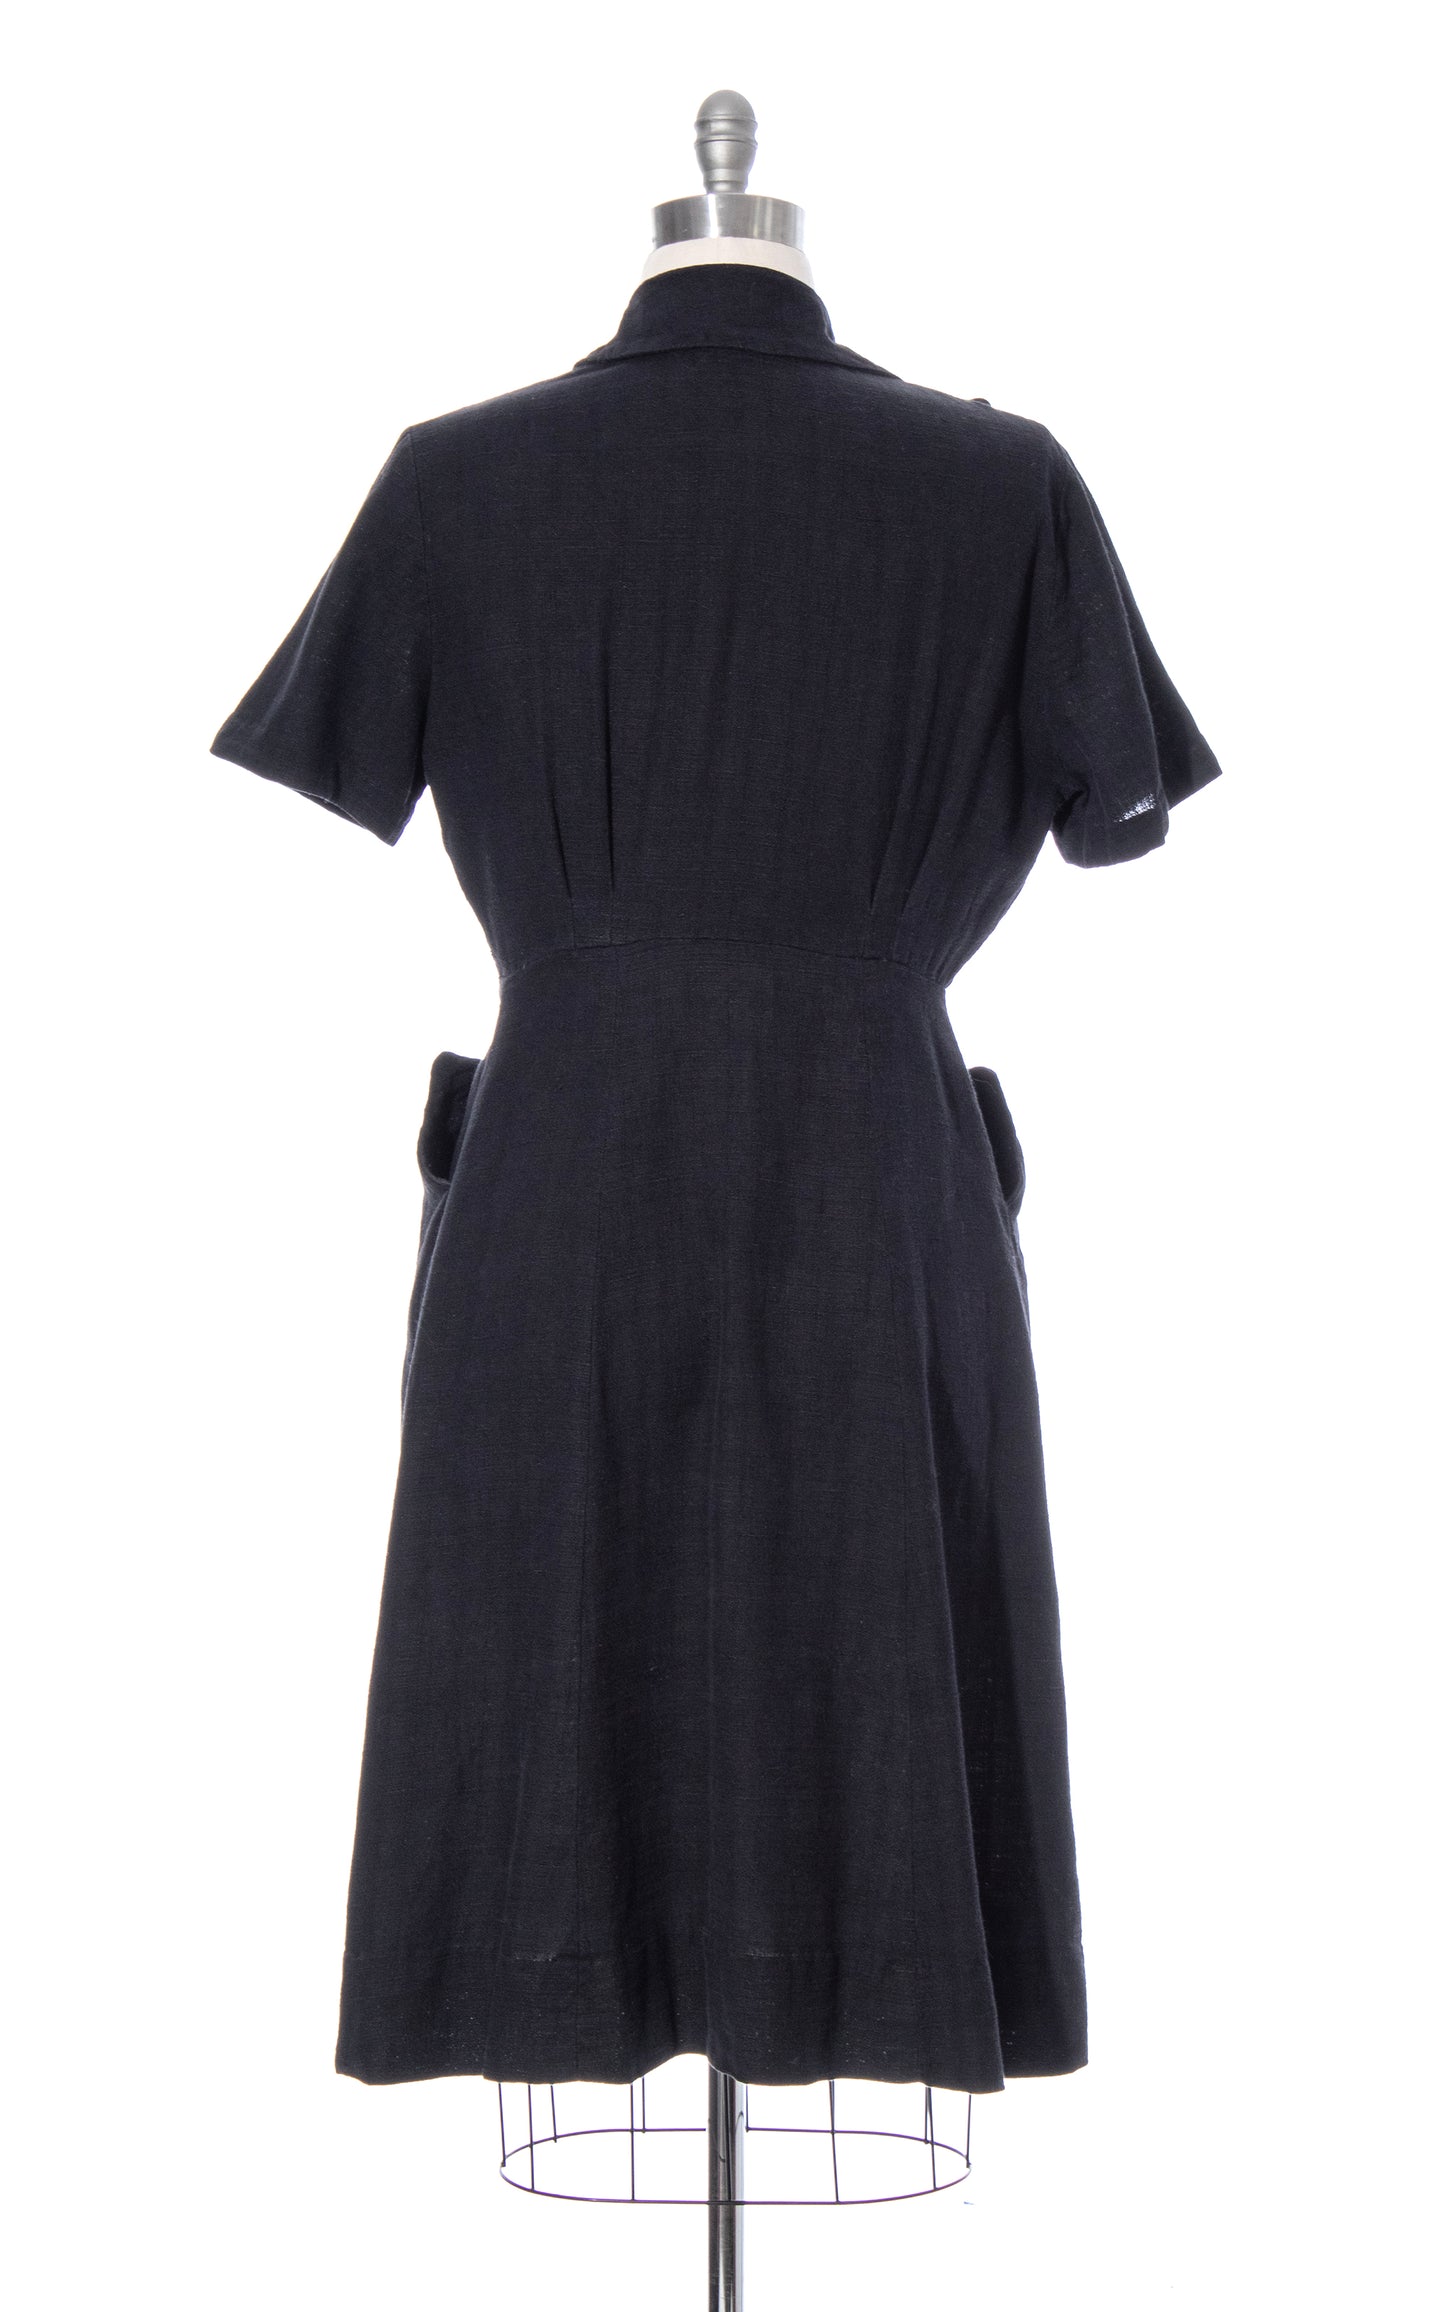 Vintage 50s 1950s Black Cotton Shirtwaist Day Dress with Pockets BirthdayLifeVintage